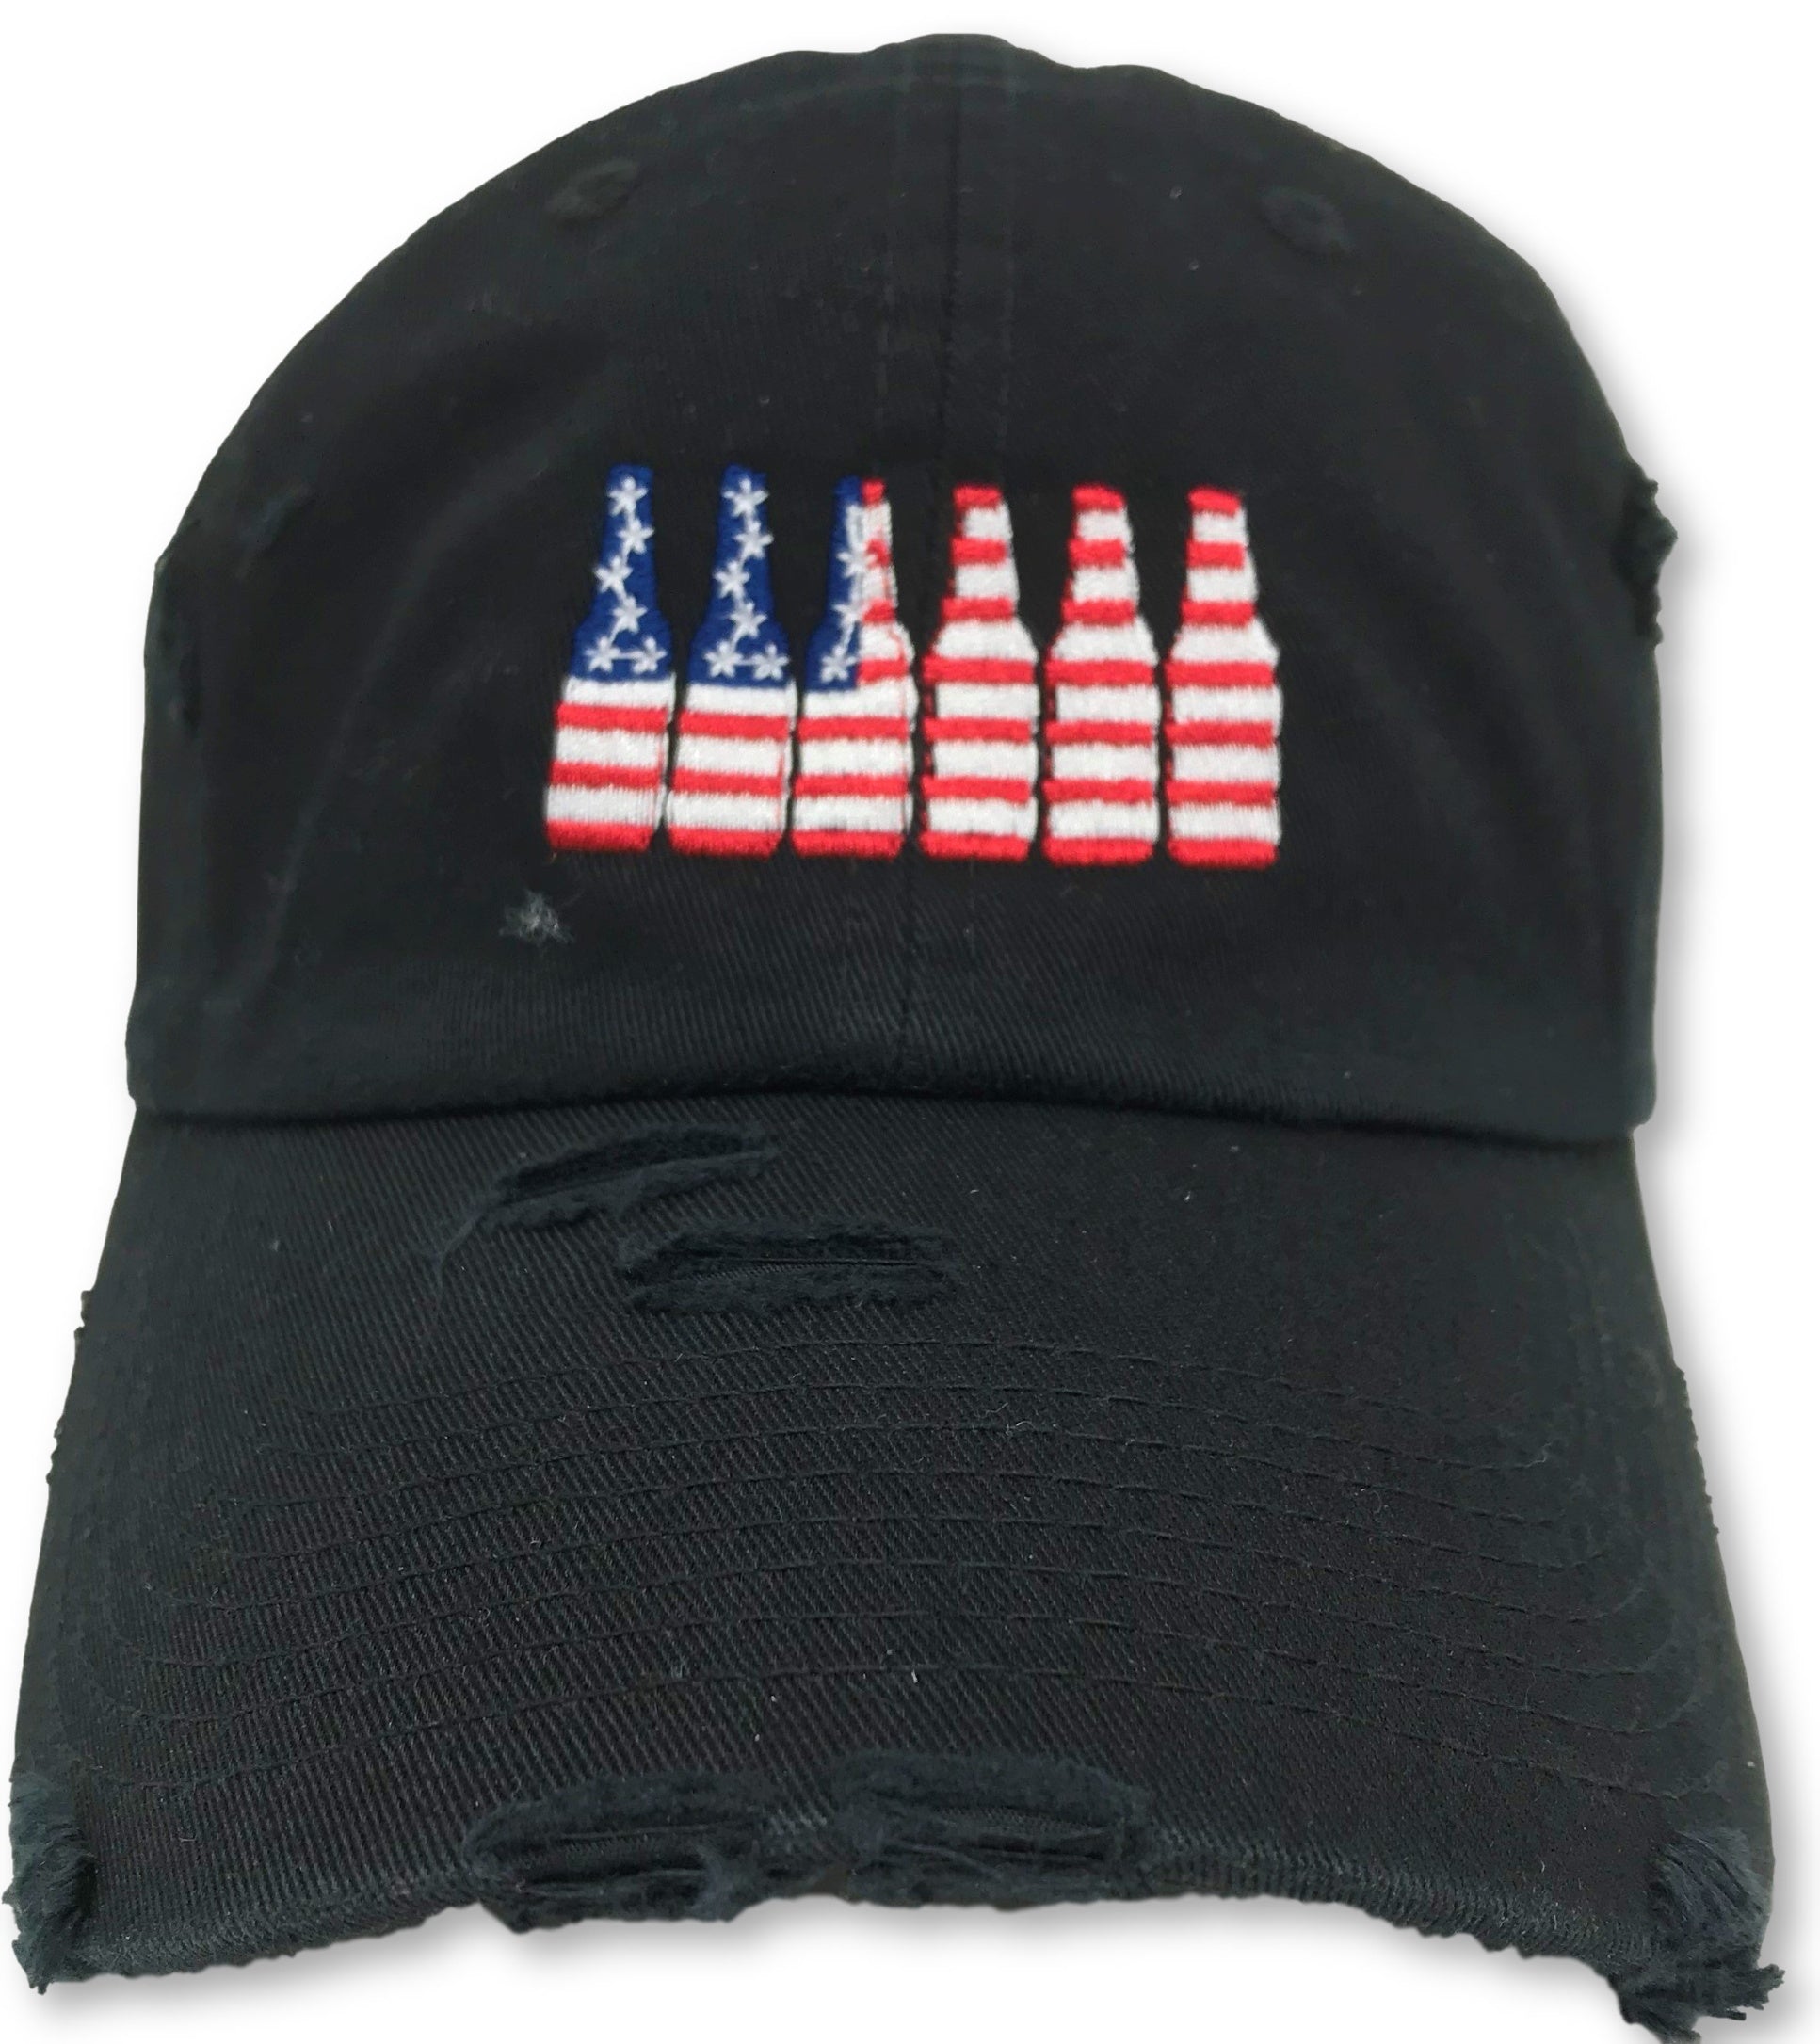 Black 6 Pack American Flag Hat